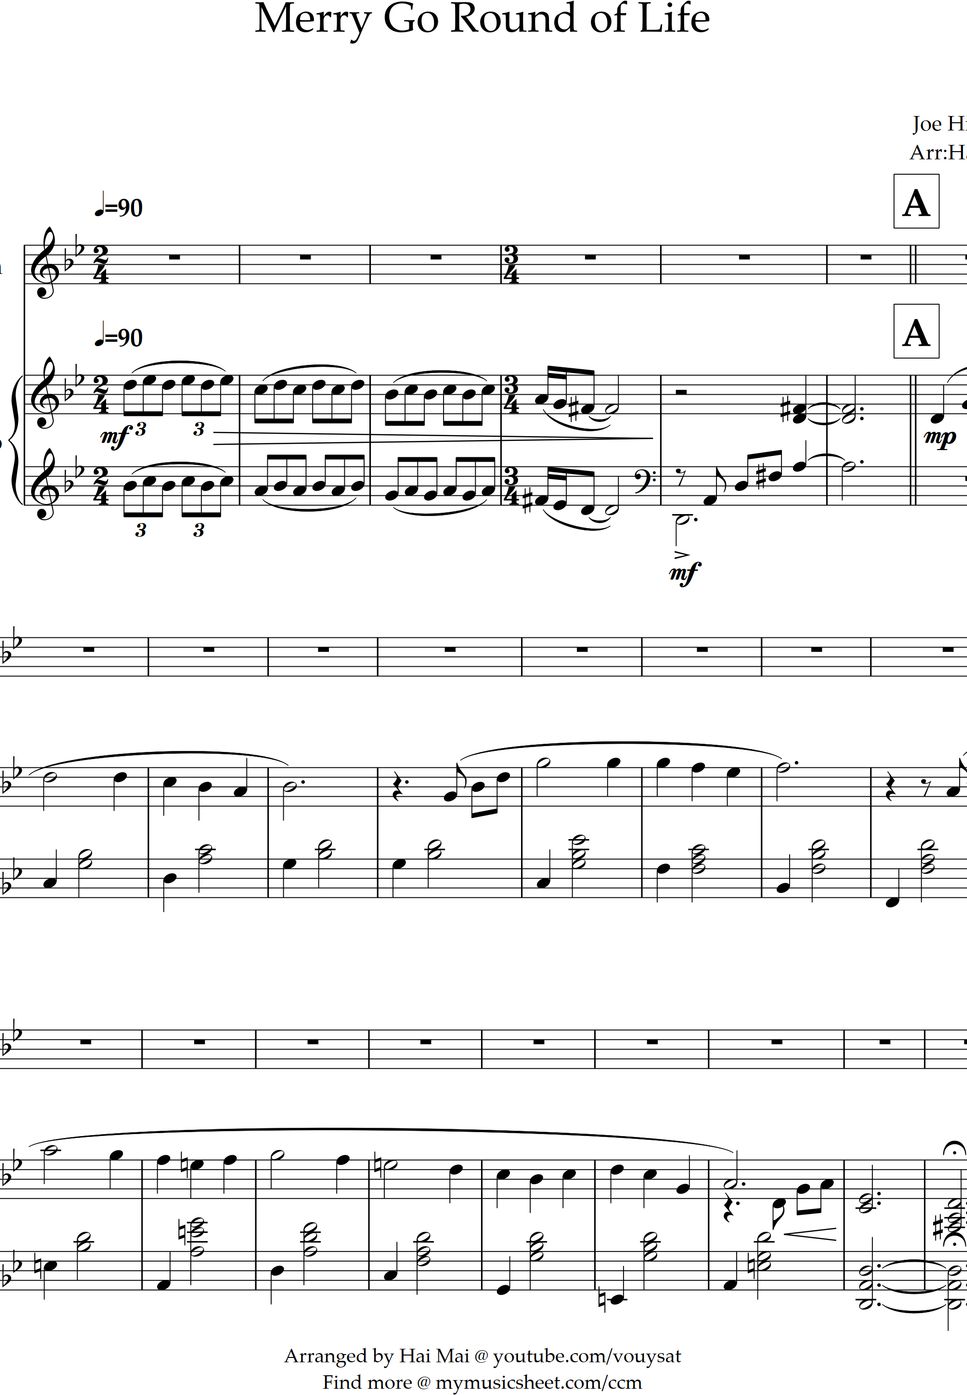 Joe Hisaishi - Merry Go Round of Life for Violin solo (easy) with Piano Accompaniment by Hai Mai